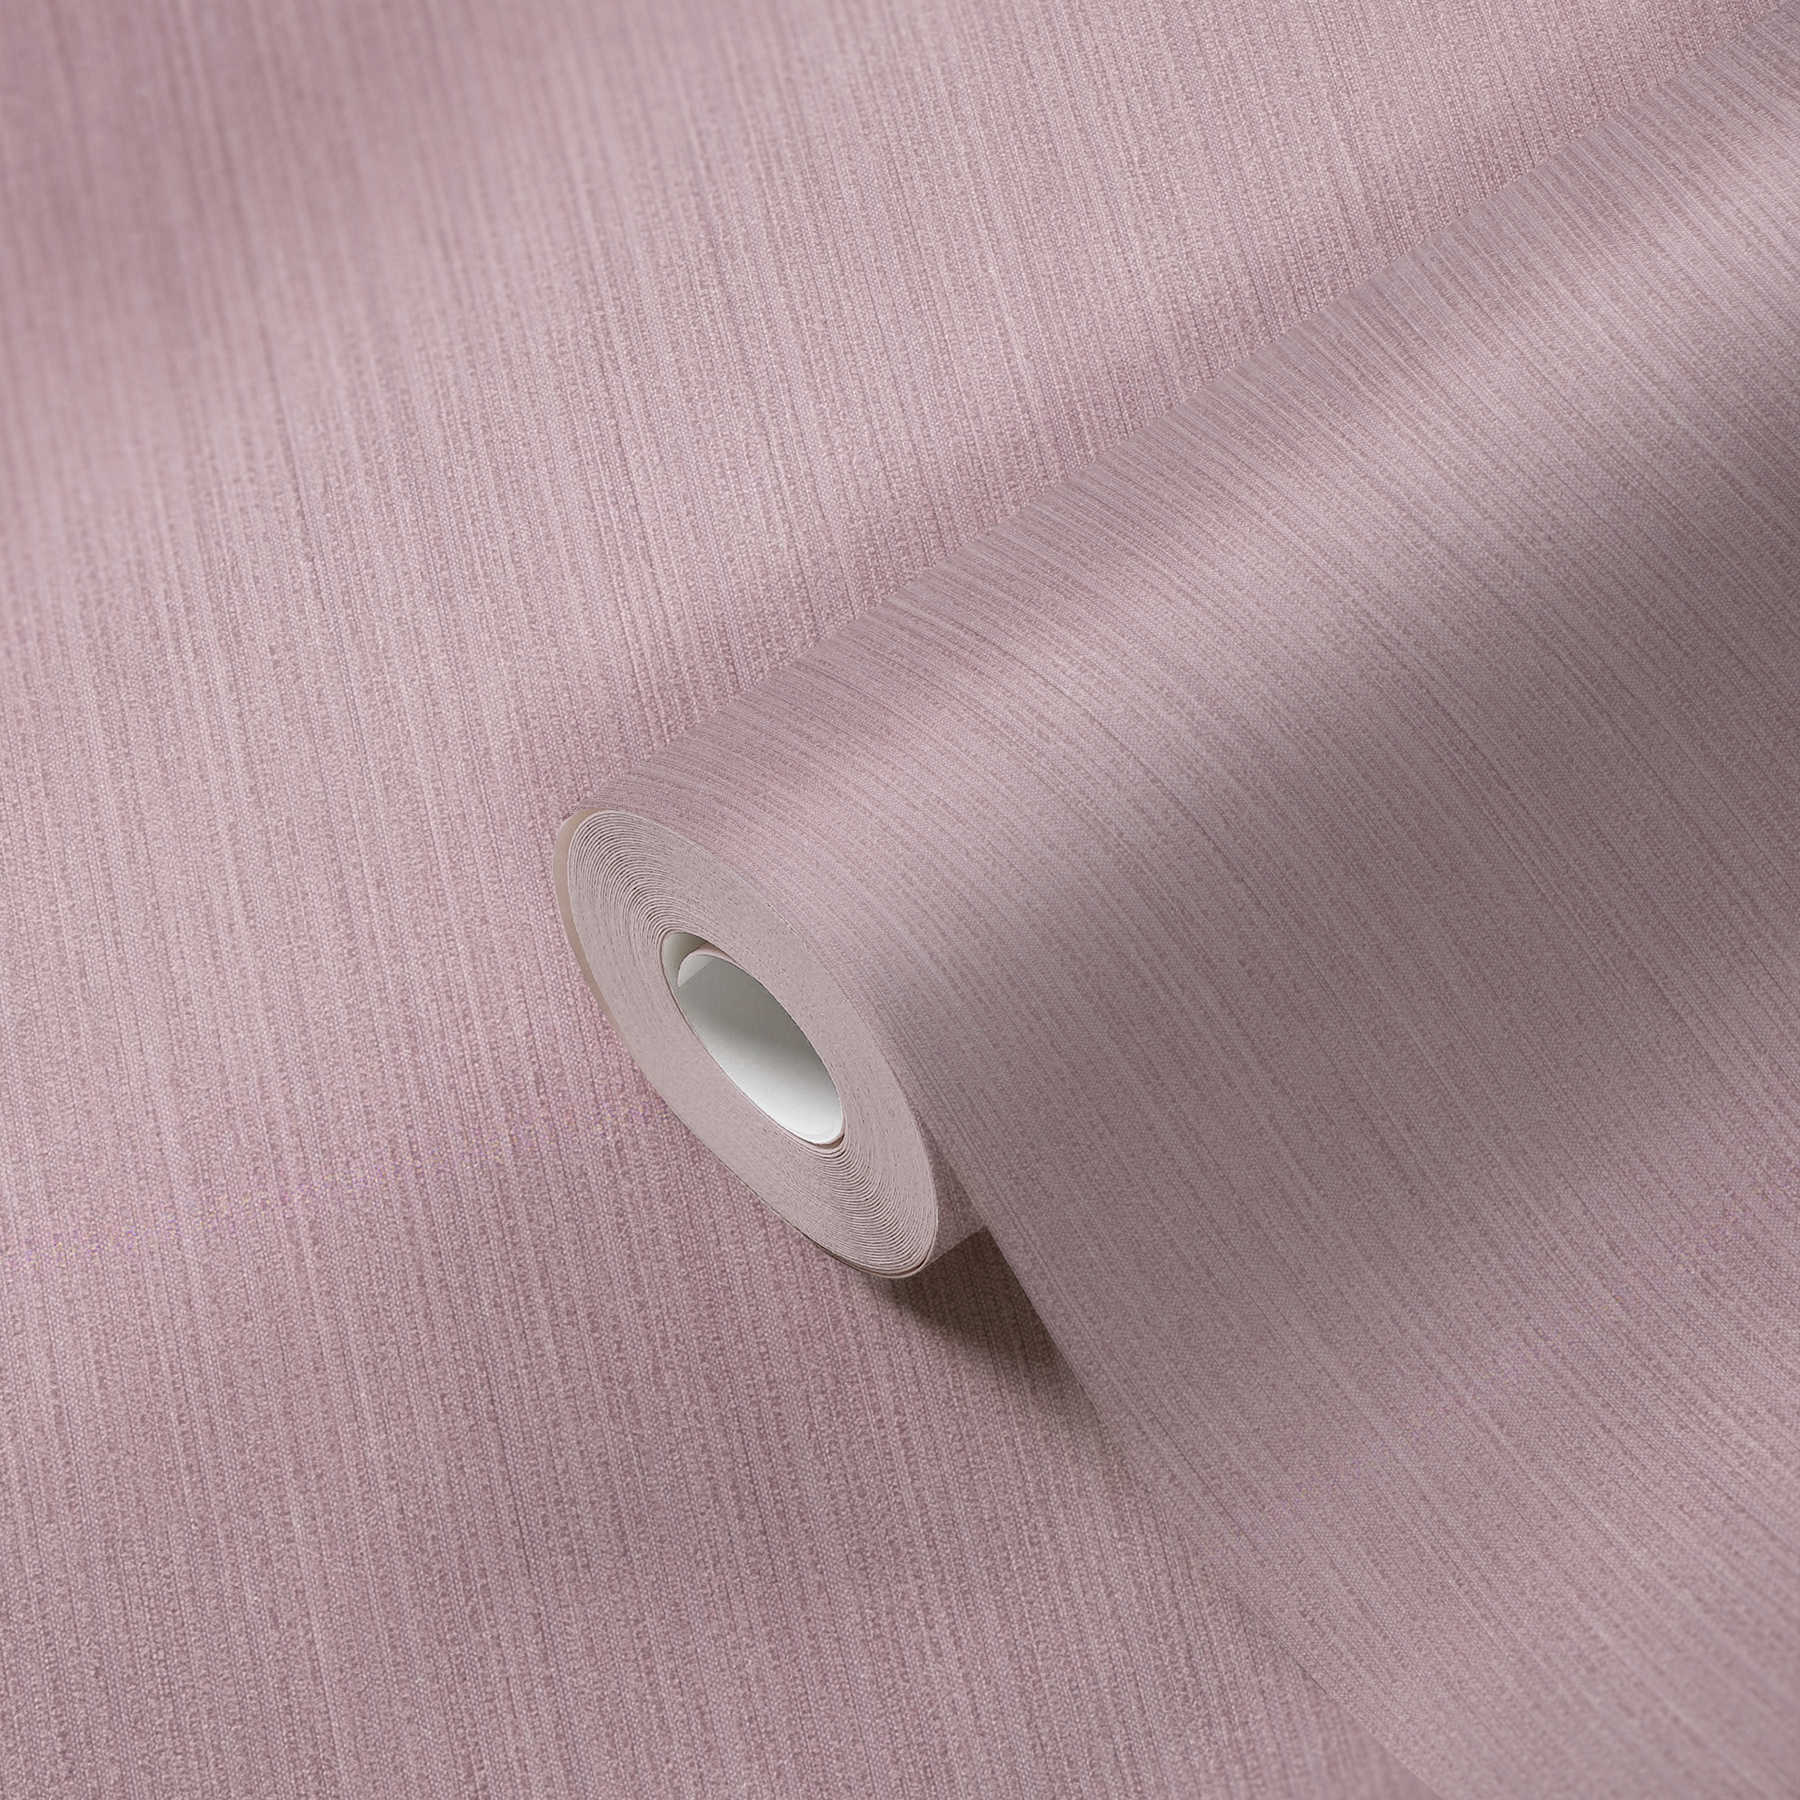             wallpaper MICHALSKY lined textured pattern - purple, pink
        